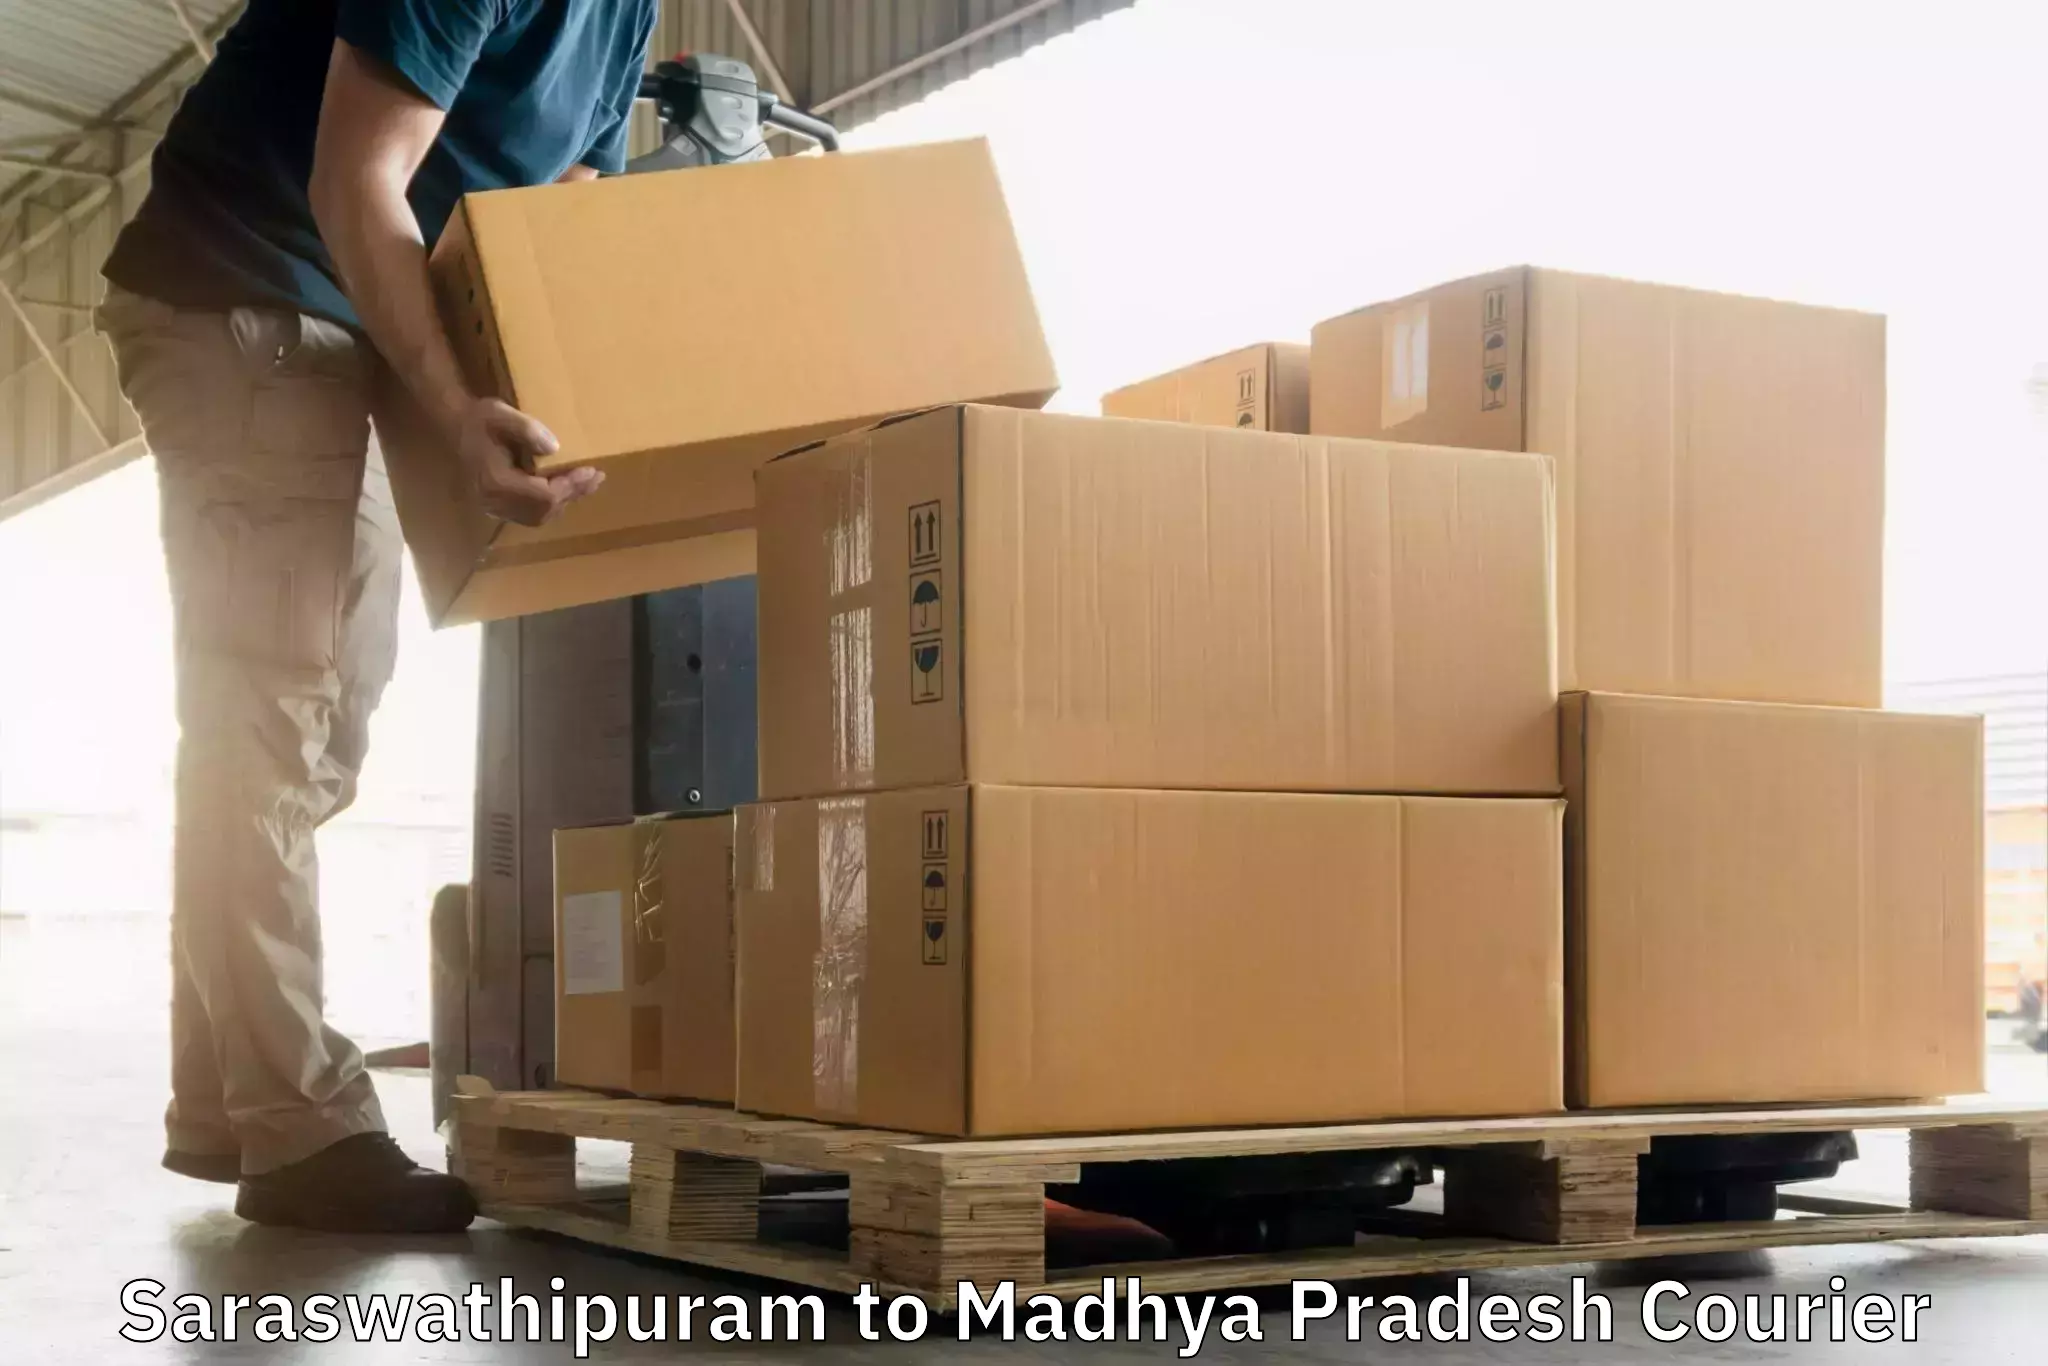 Courier service partnerships Saraswathipuram to Madhya Pradesh